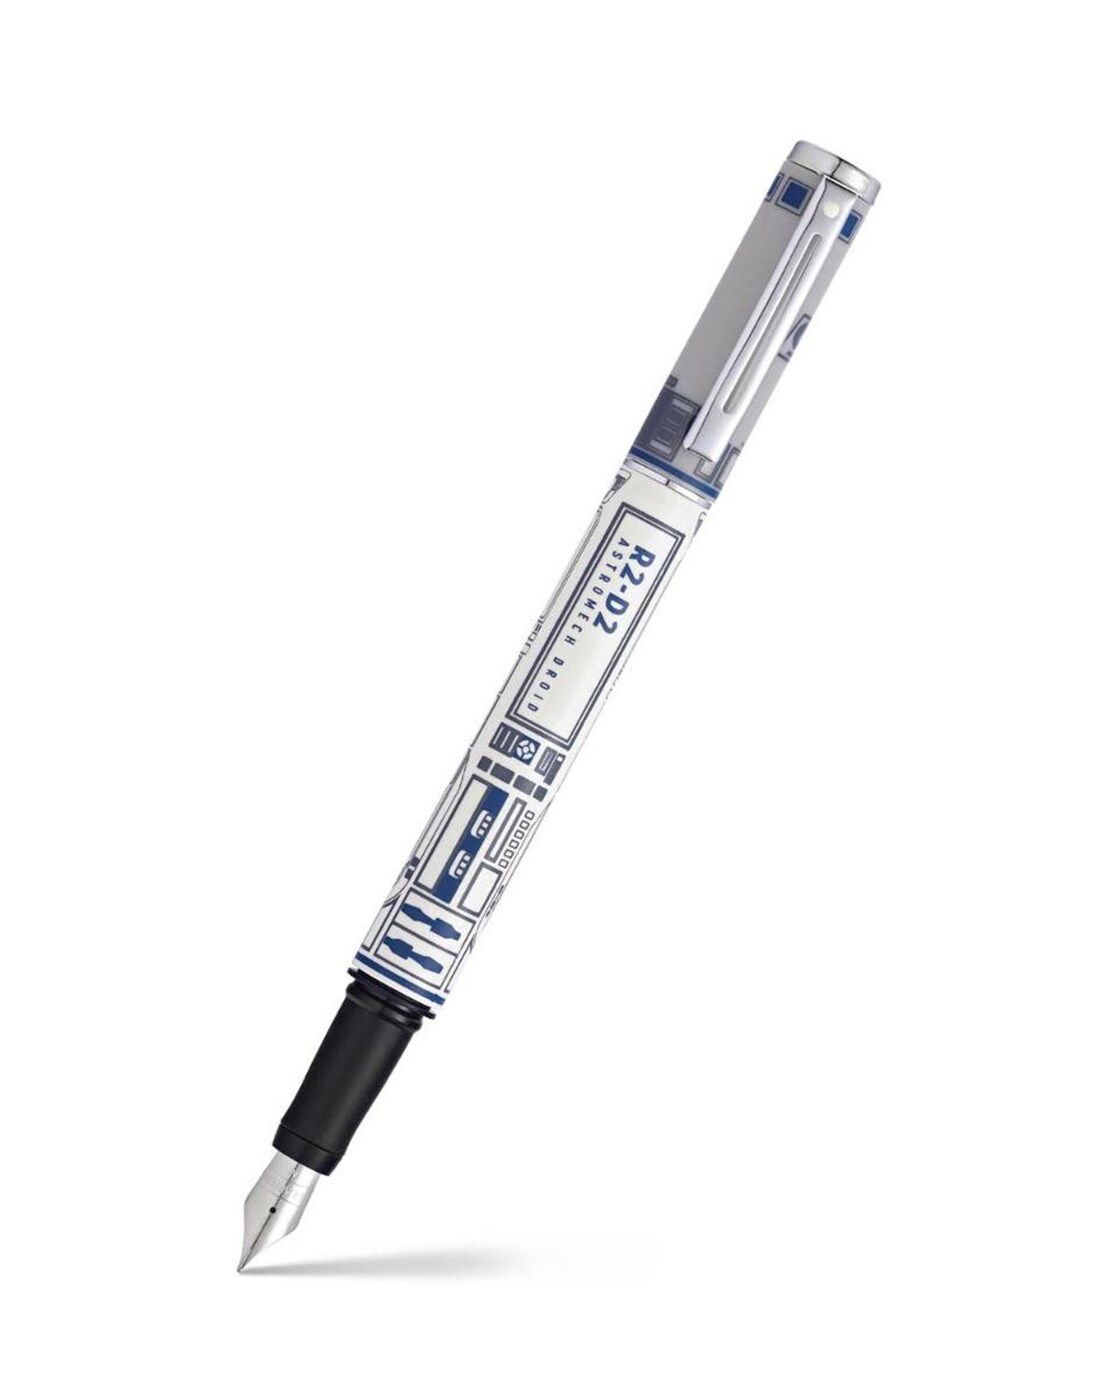 Shaeffer Star Wars Ballpoint Pen - R2D2 